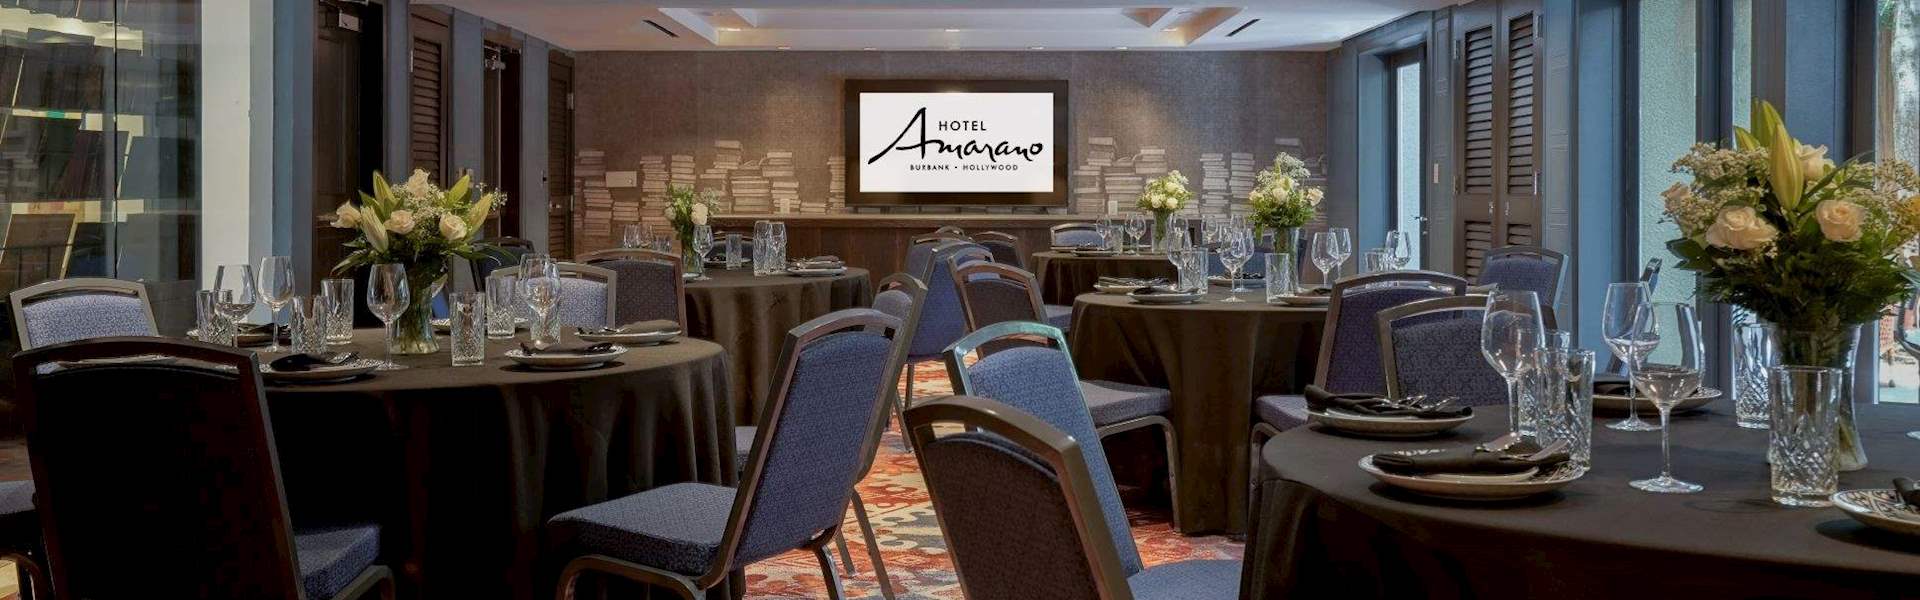 Our Venues of Hotel Amarano Burbank-Hollywood, Burbank